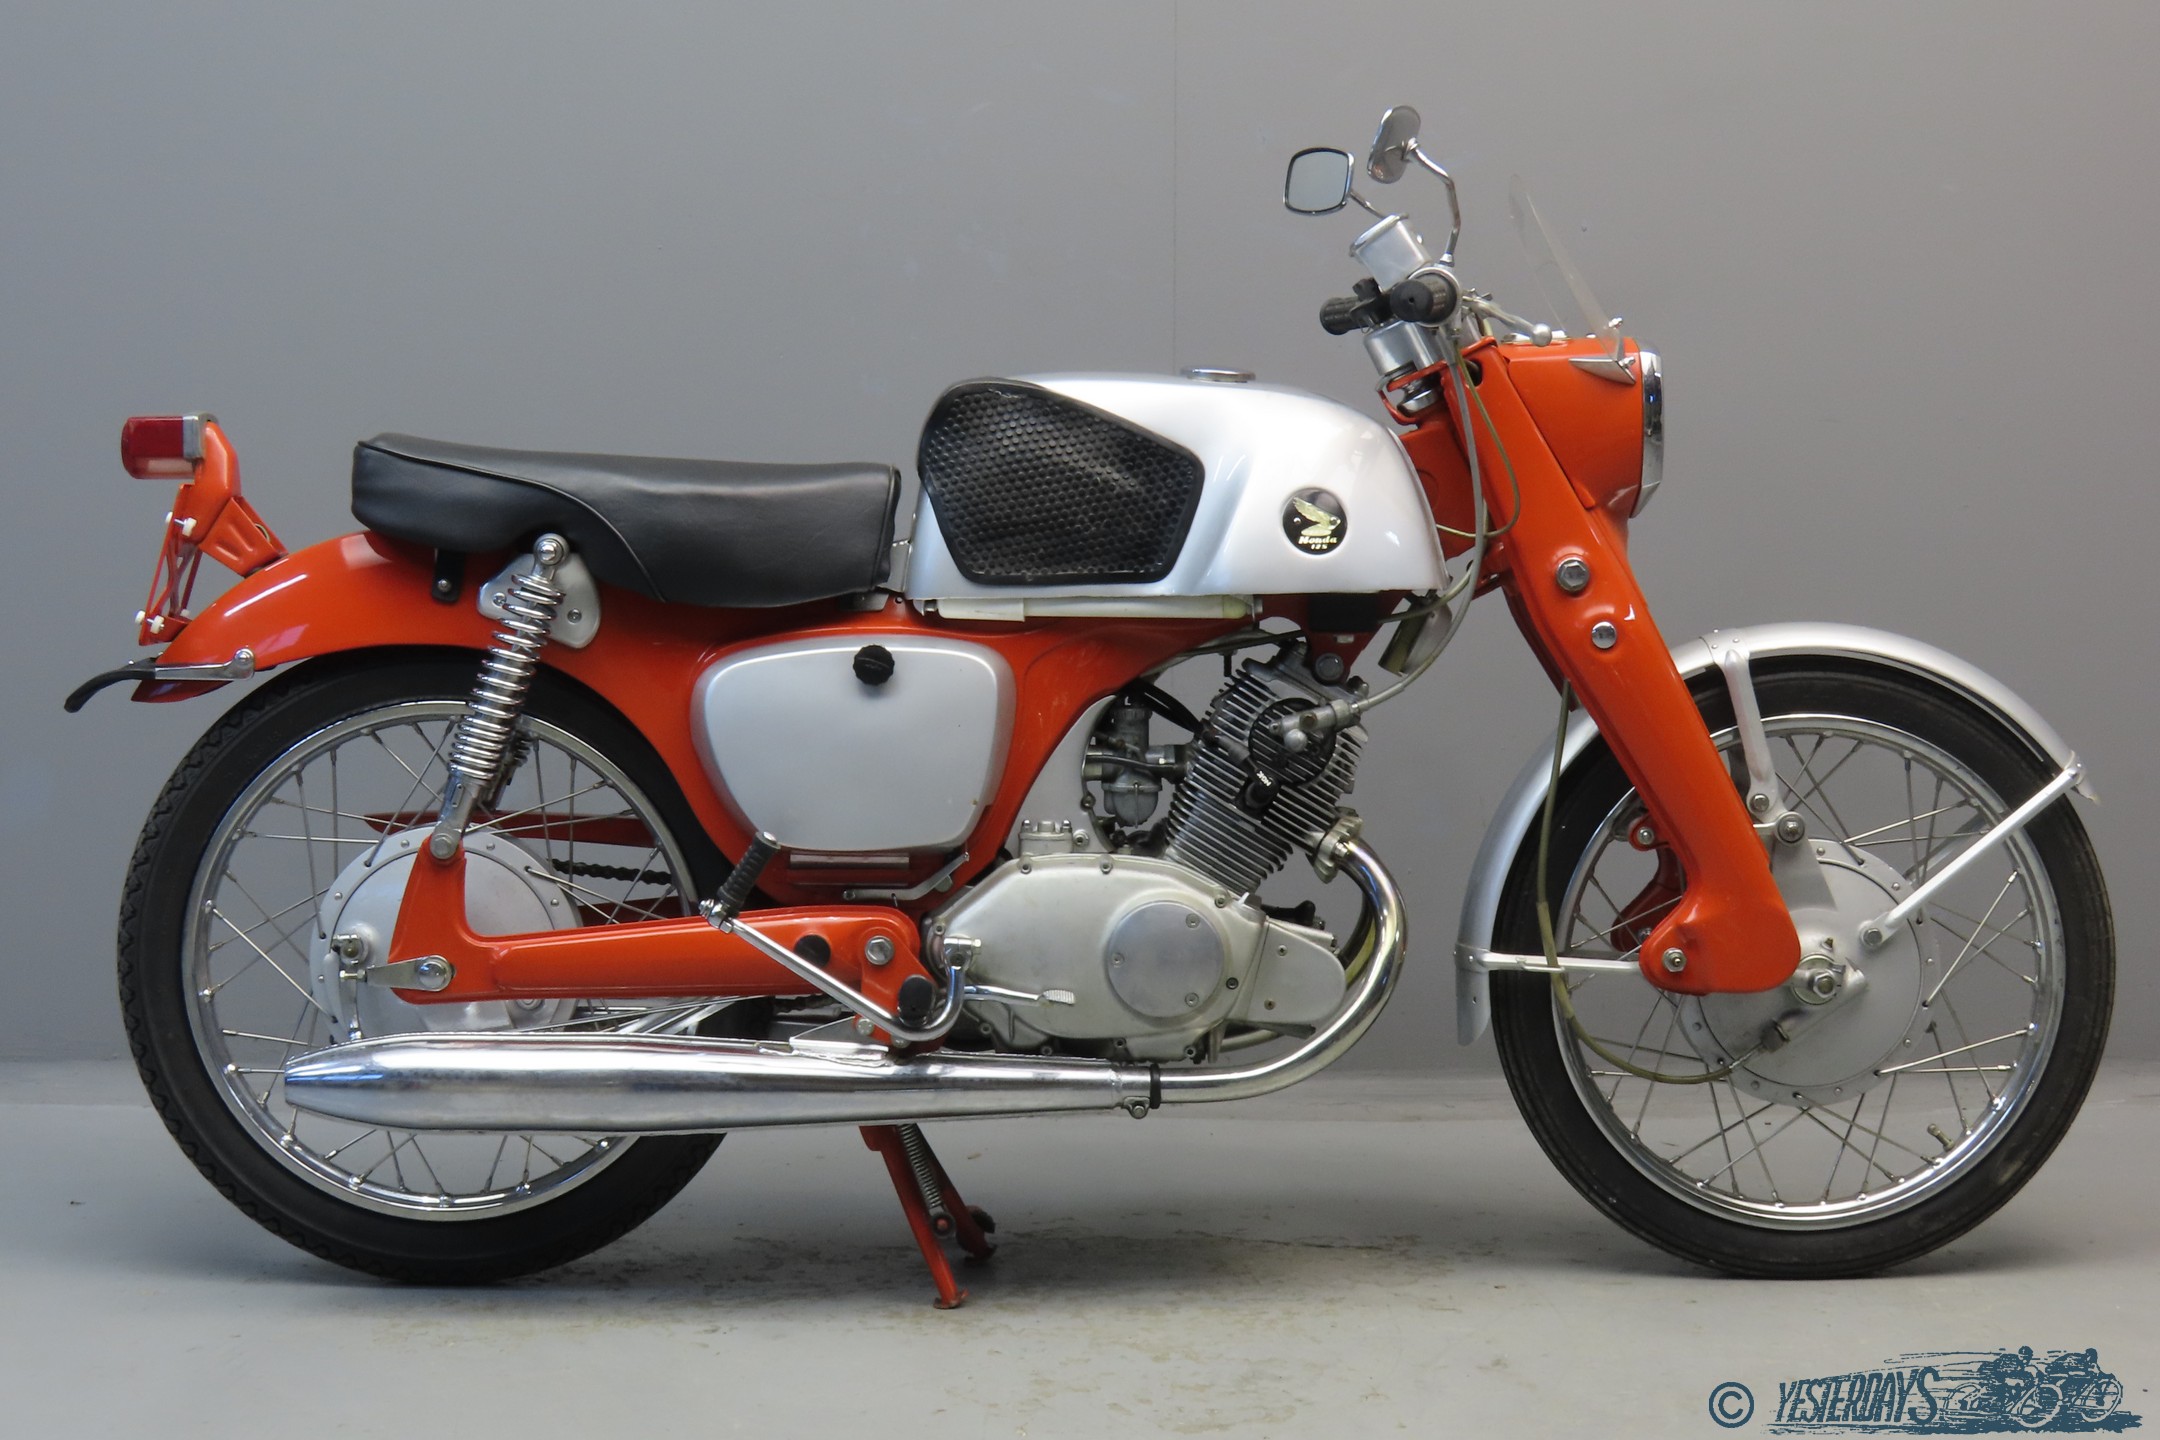 Honda collection, 125cc-305cc, 2cyl ohc,1960-1969 - Yesterdays